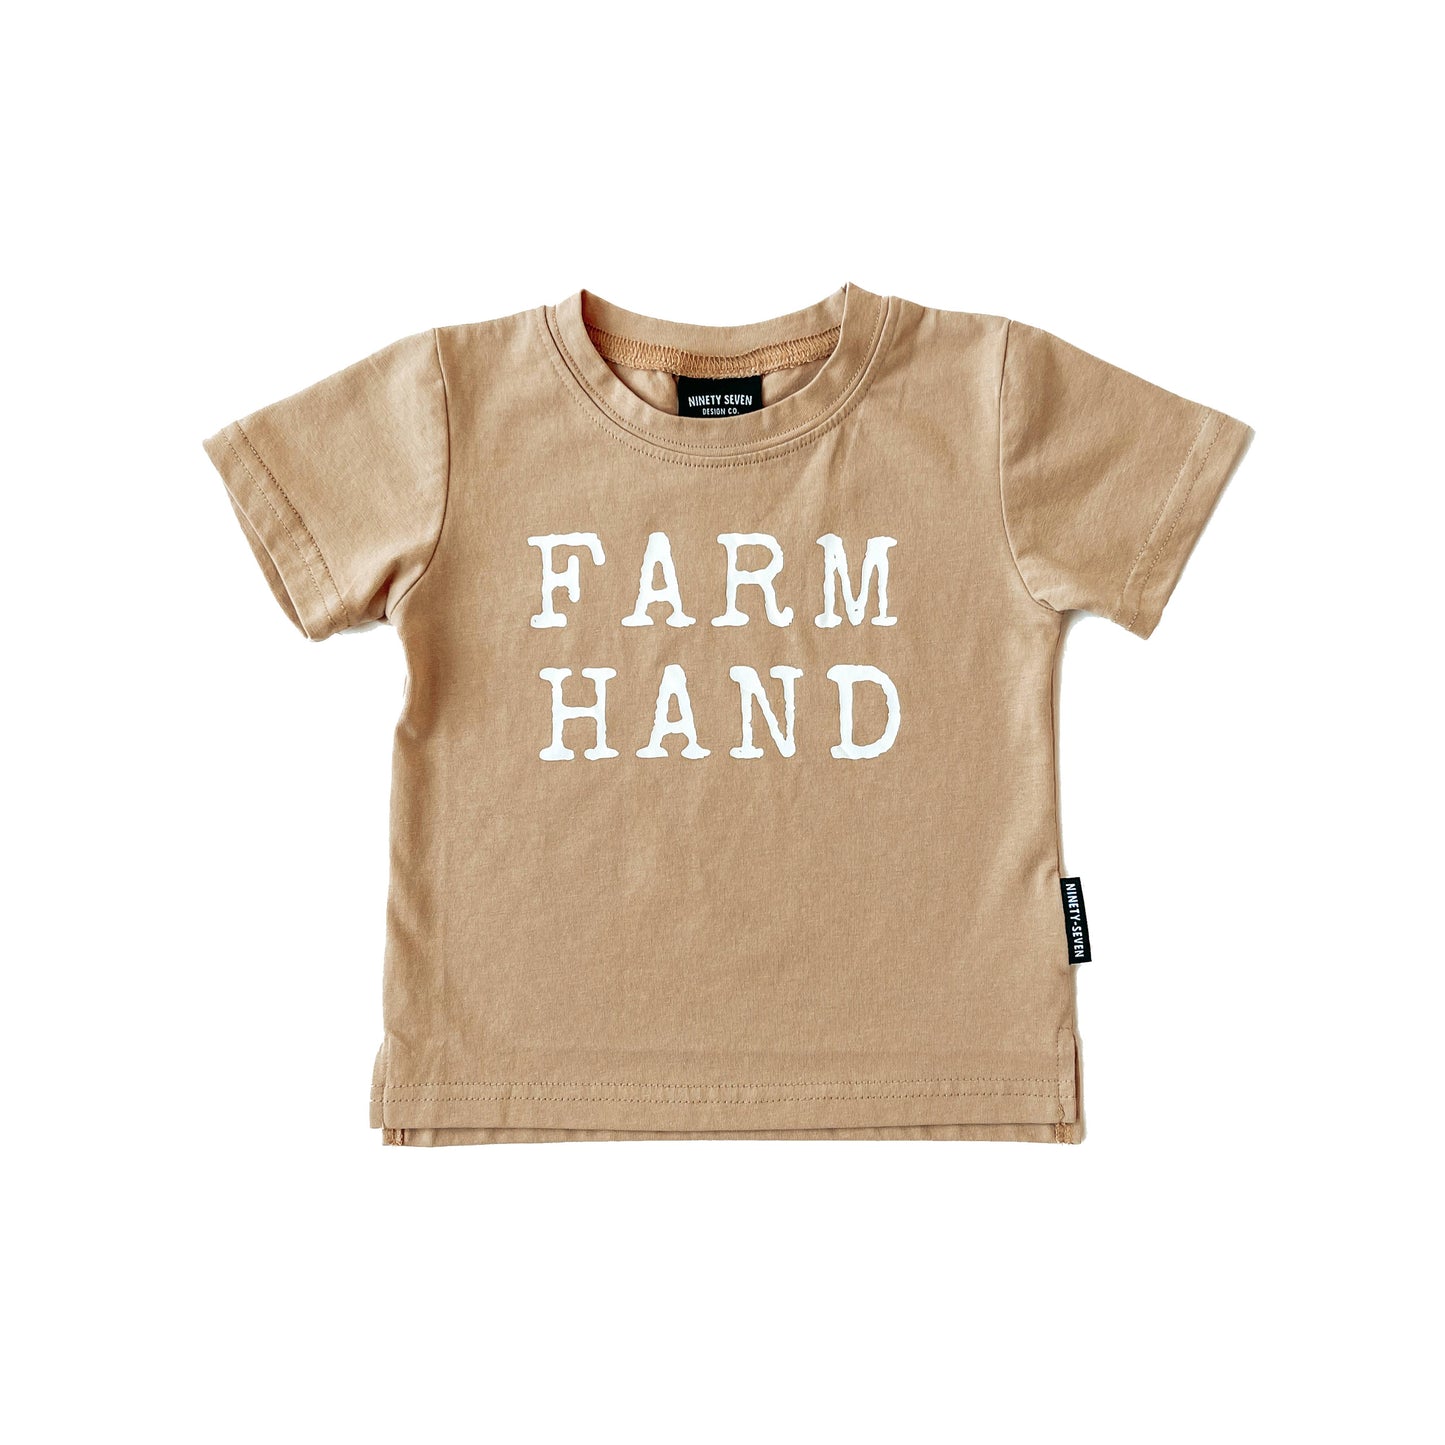 Farm Hand - Beige Kids Tee